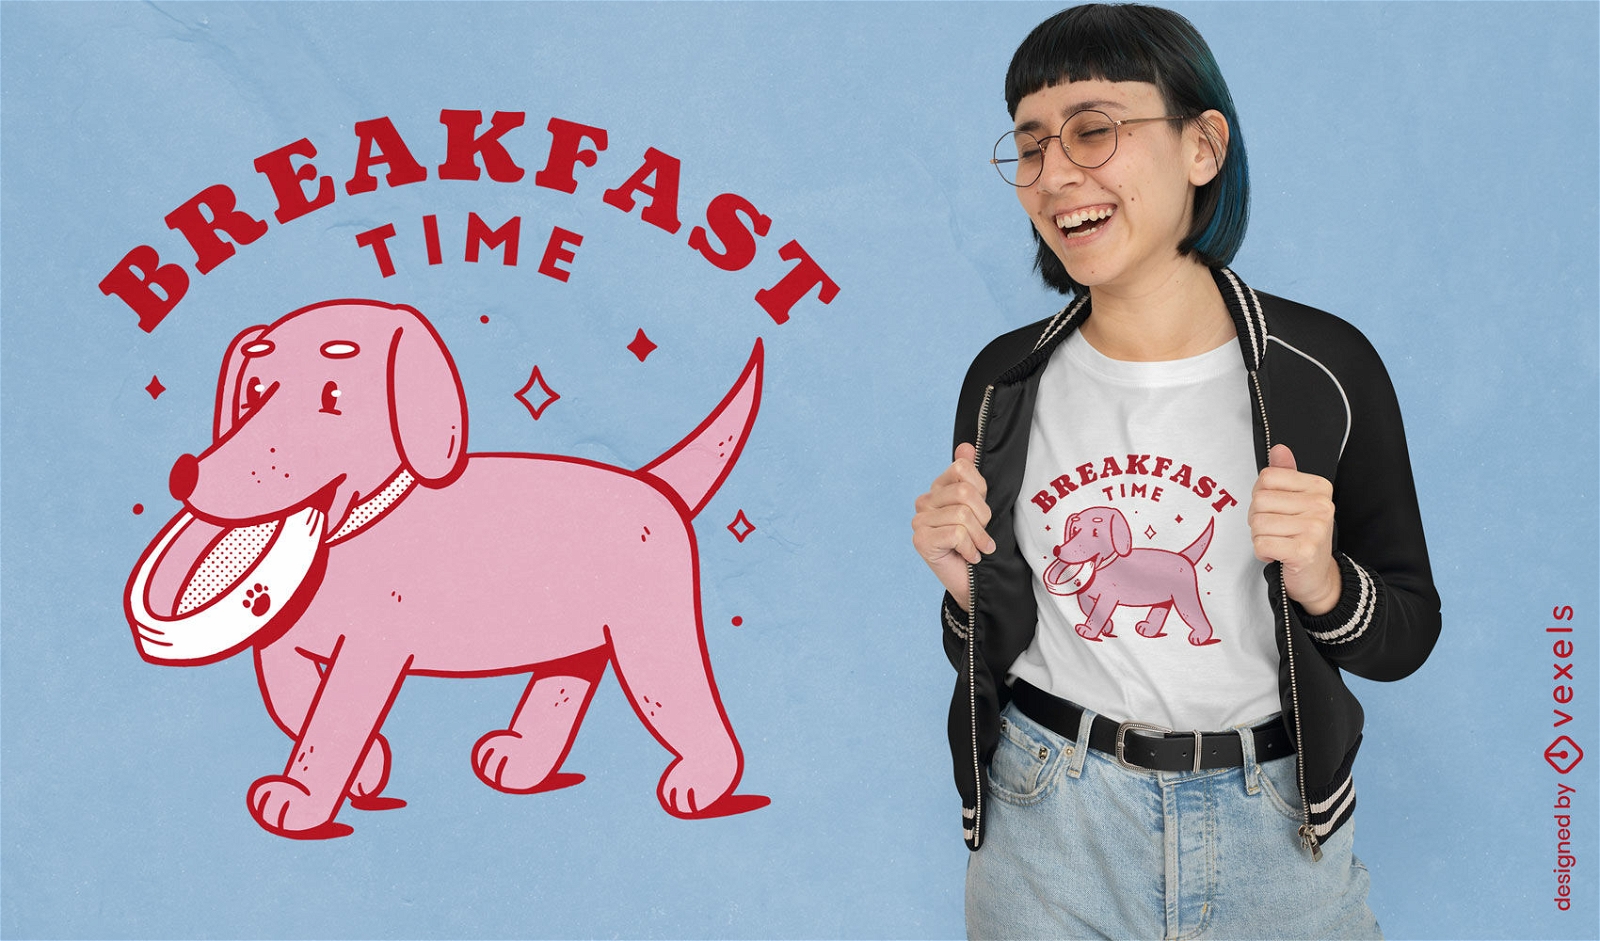 Breakfast time dog t-shirt design